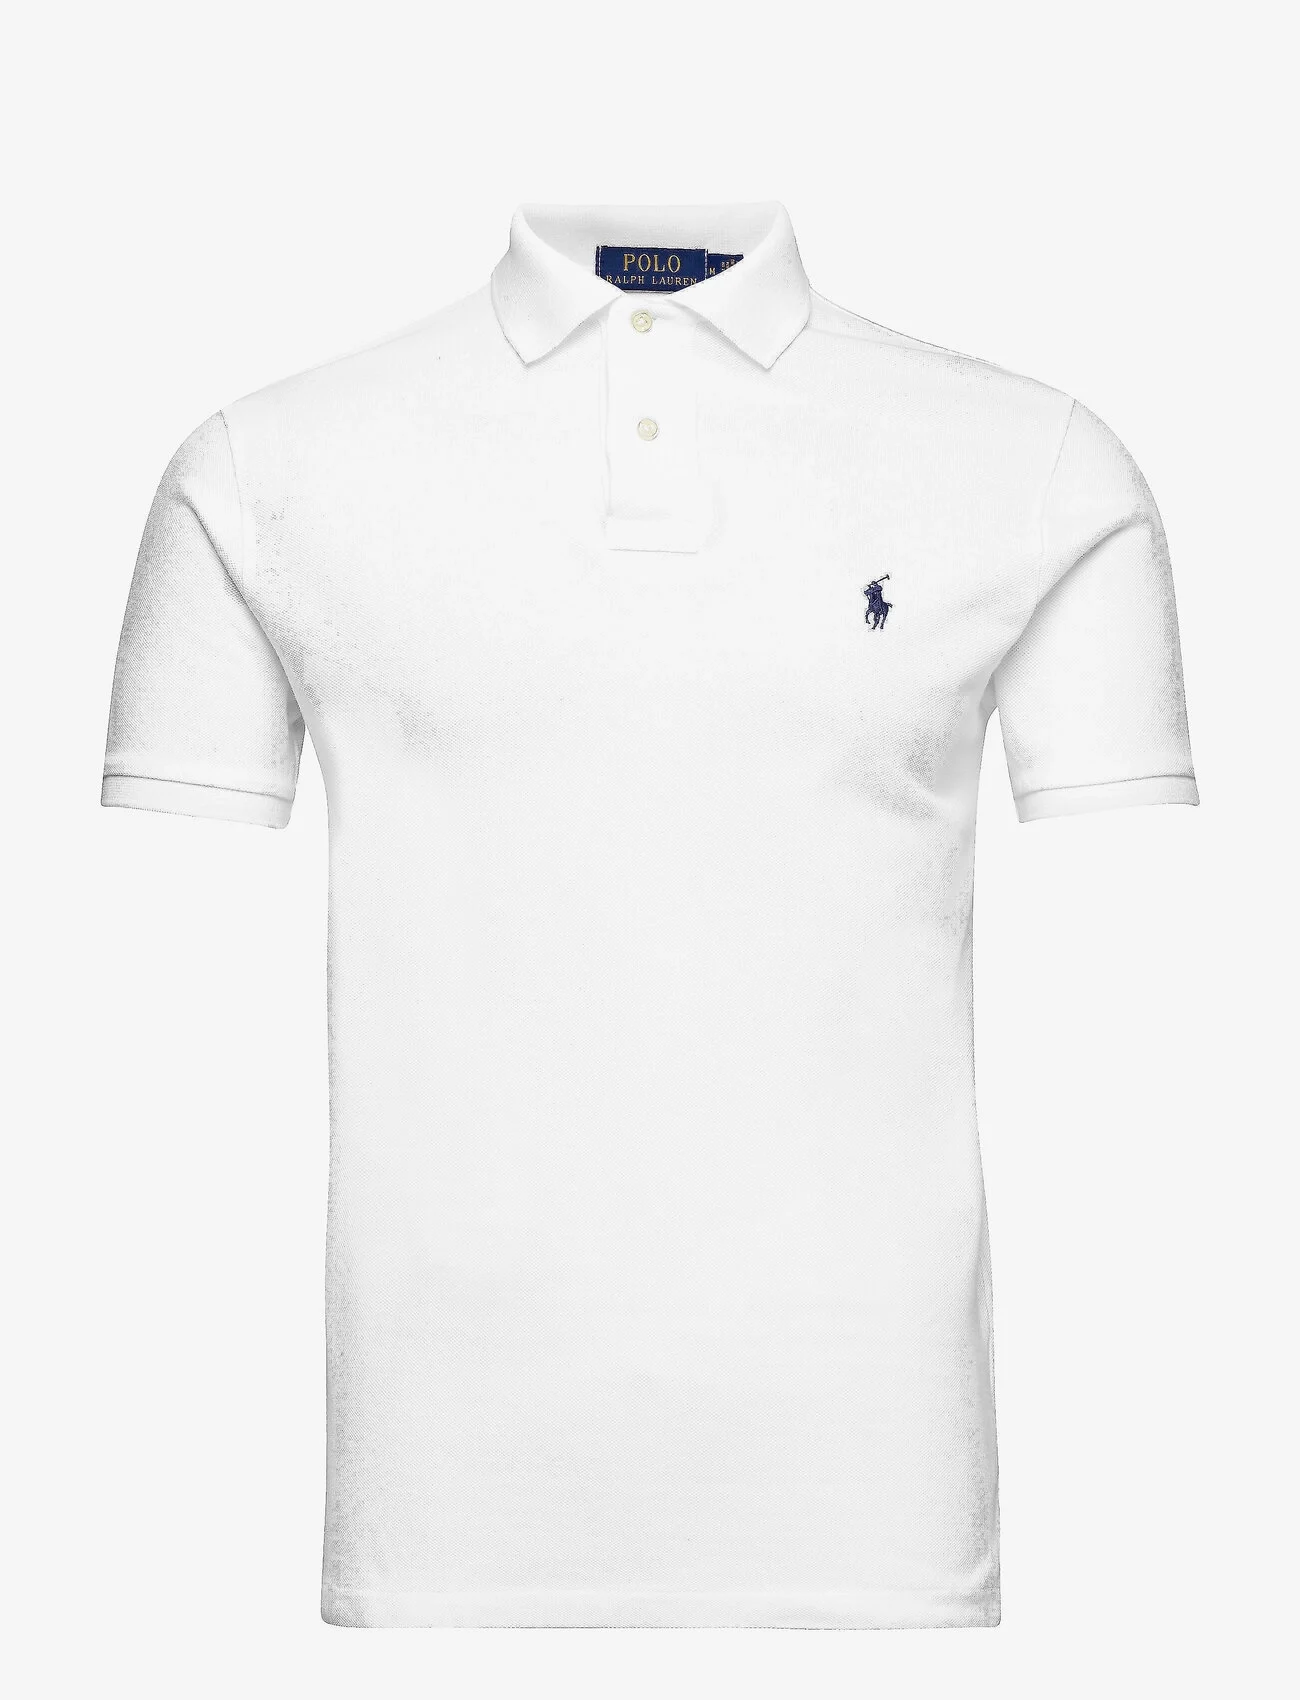 Polo Ralph Lauren - Slim Fit Mesh Polo Shirt - kurzärmelig - white - 1